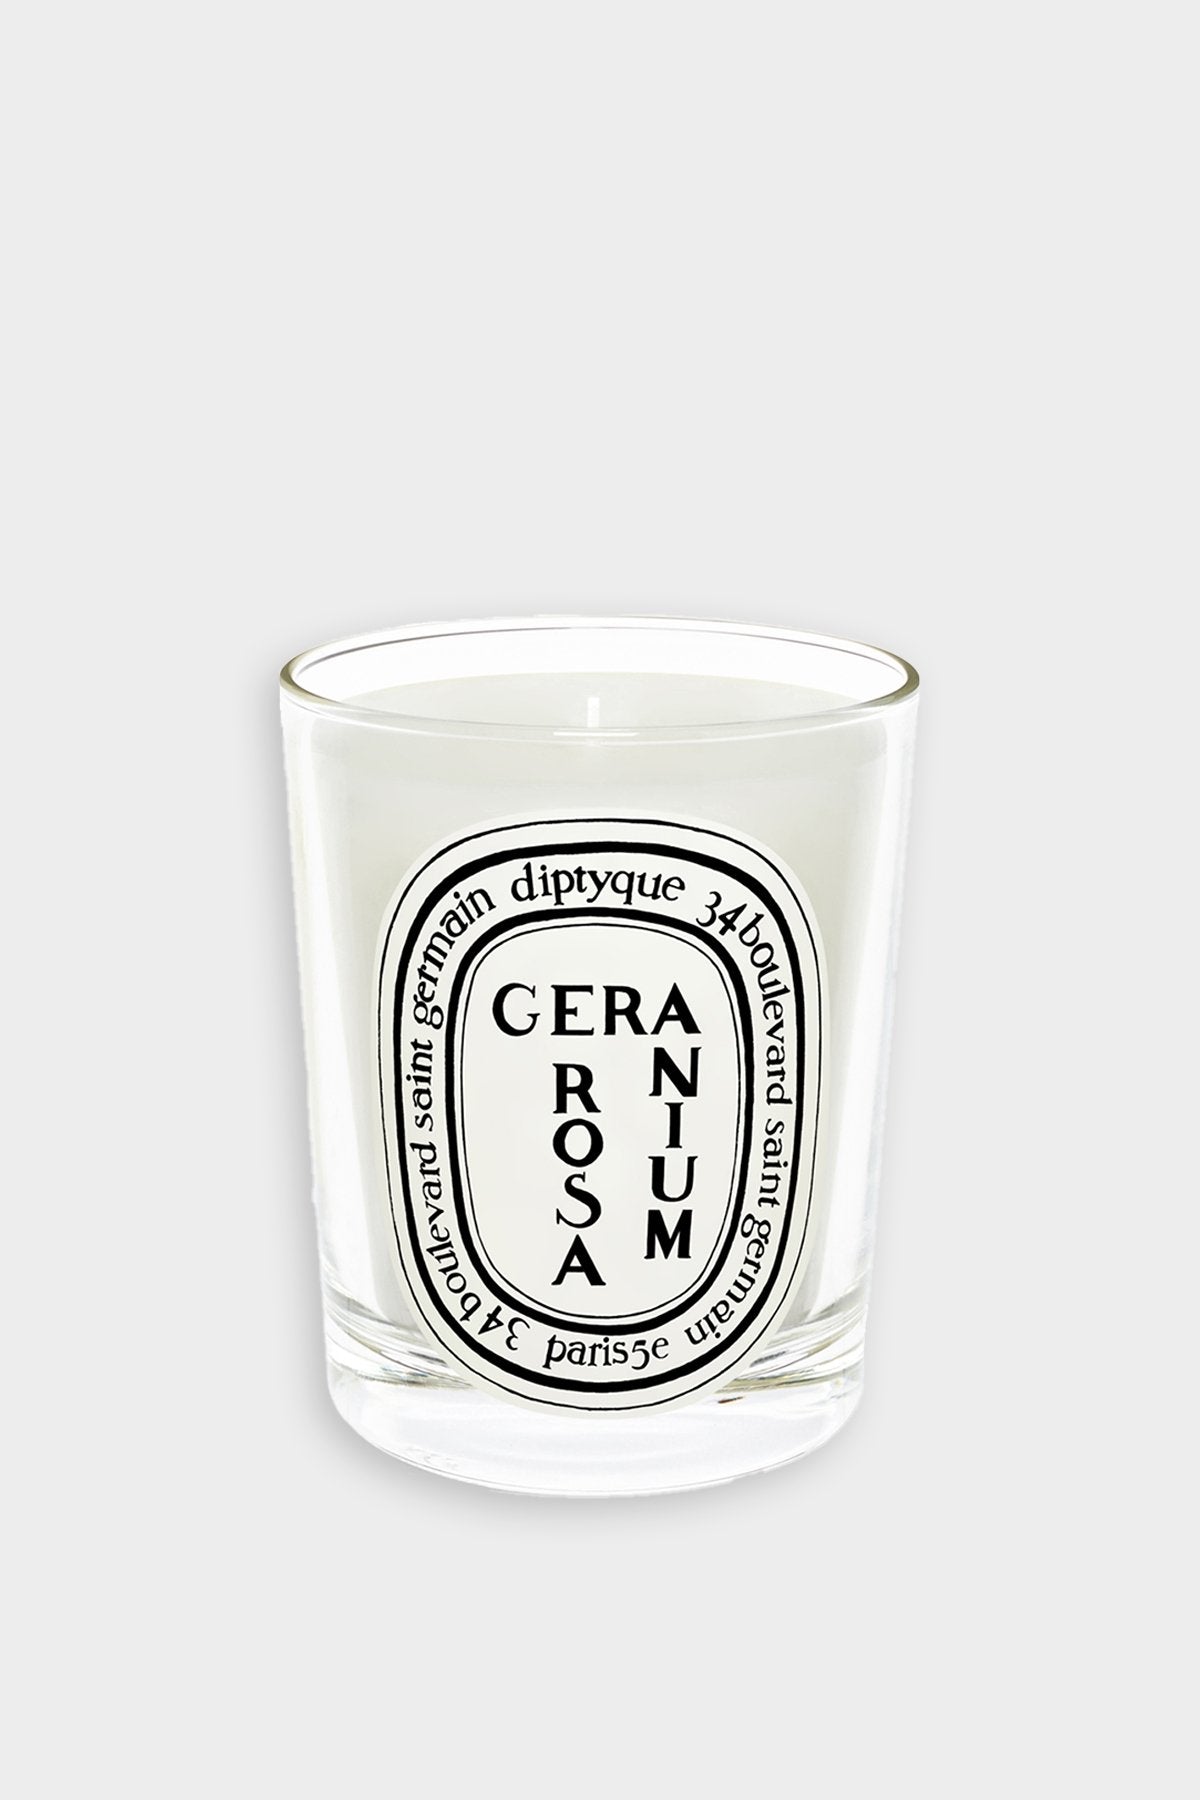 Geranium Rosa Candle Medium - shop-olivia.com